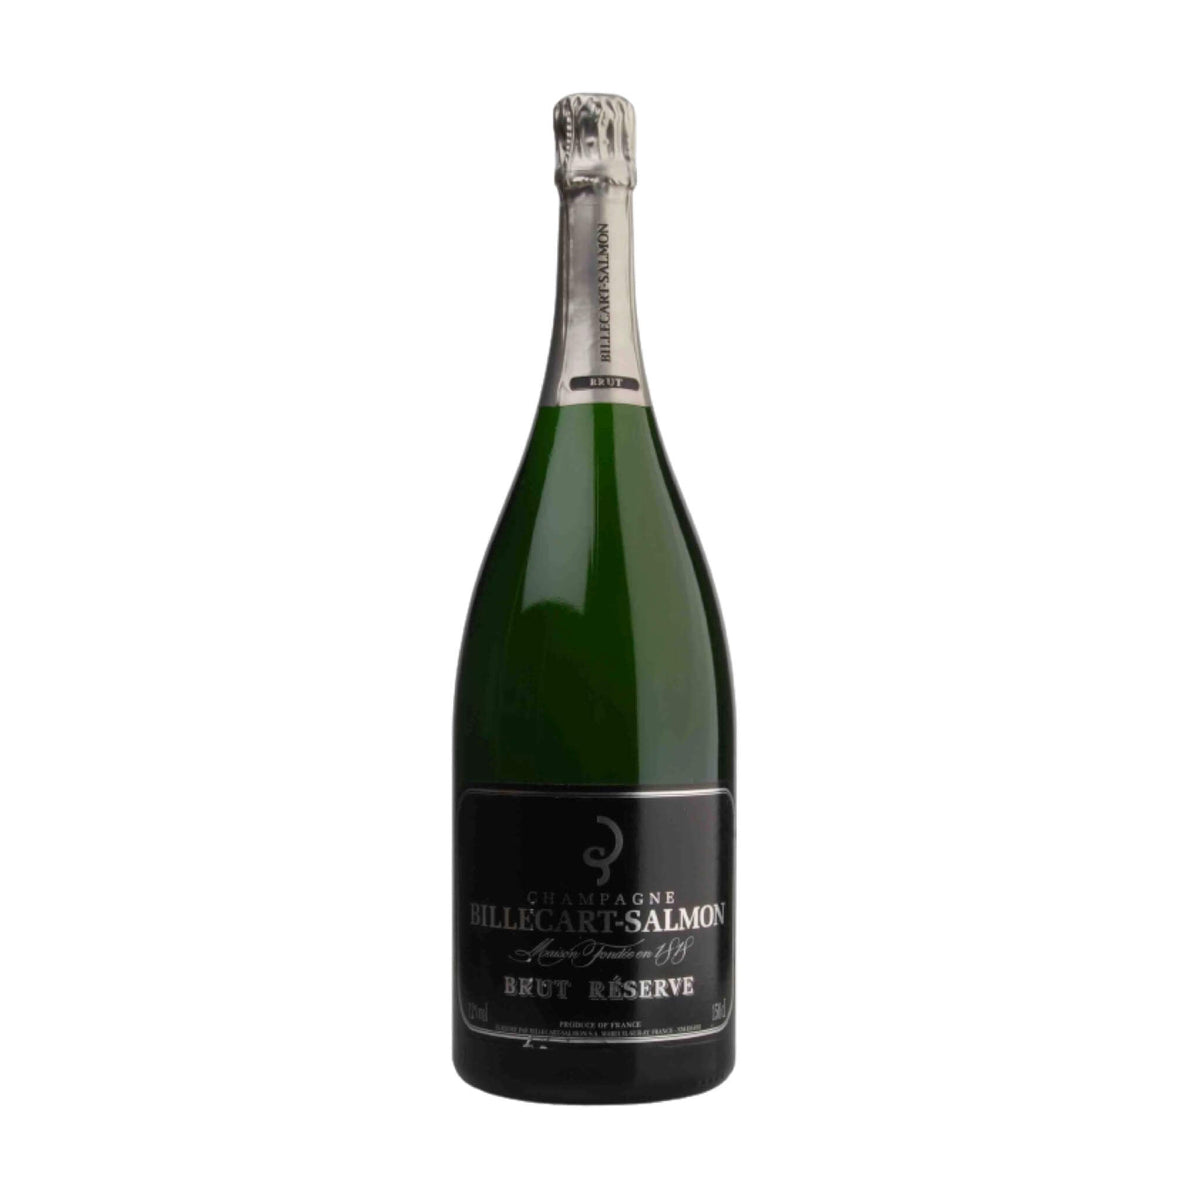 Billecart-Salmon-Champagner-Pinot Noir, Pinot Meunier, Chardonnay-Brut Reserve Champagne AOC Magnum-WINECOM